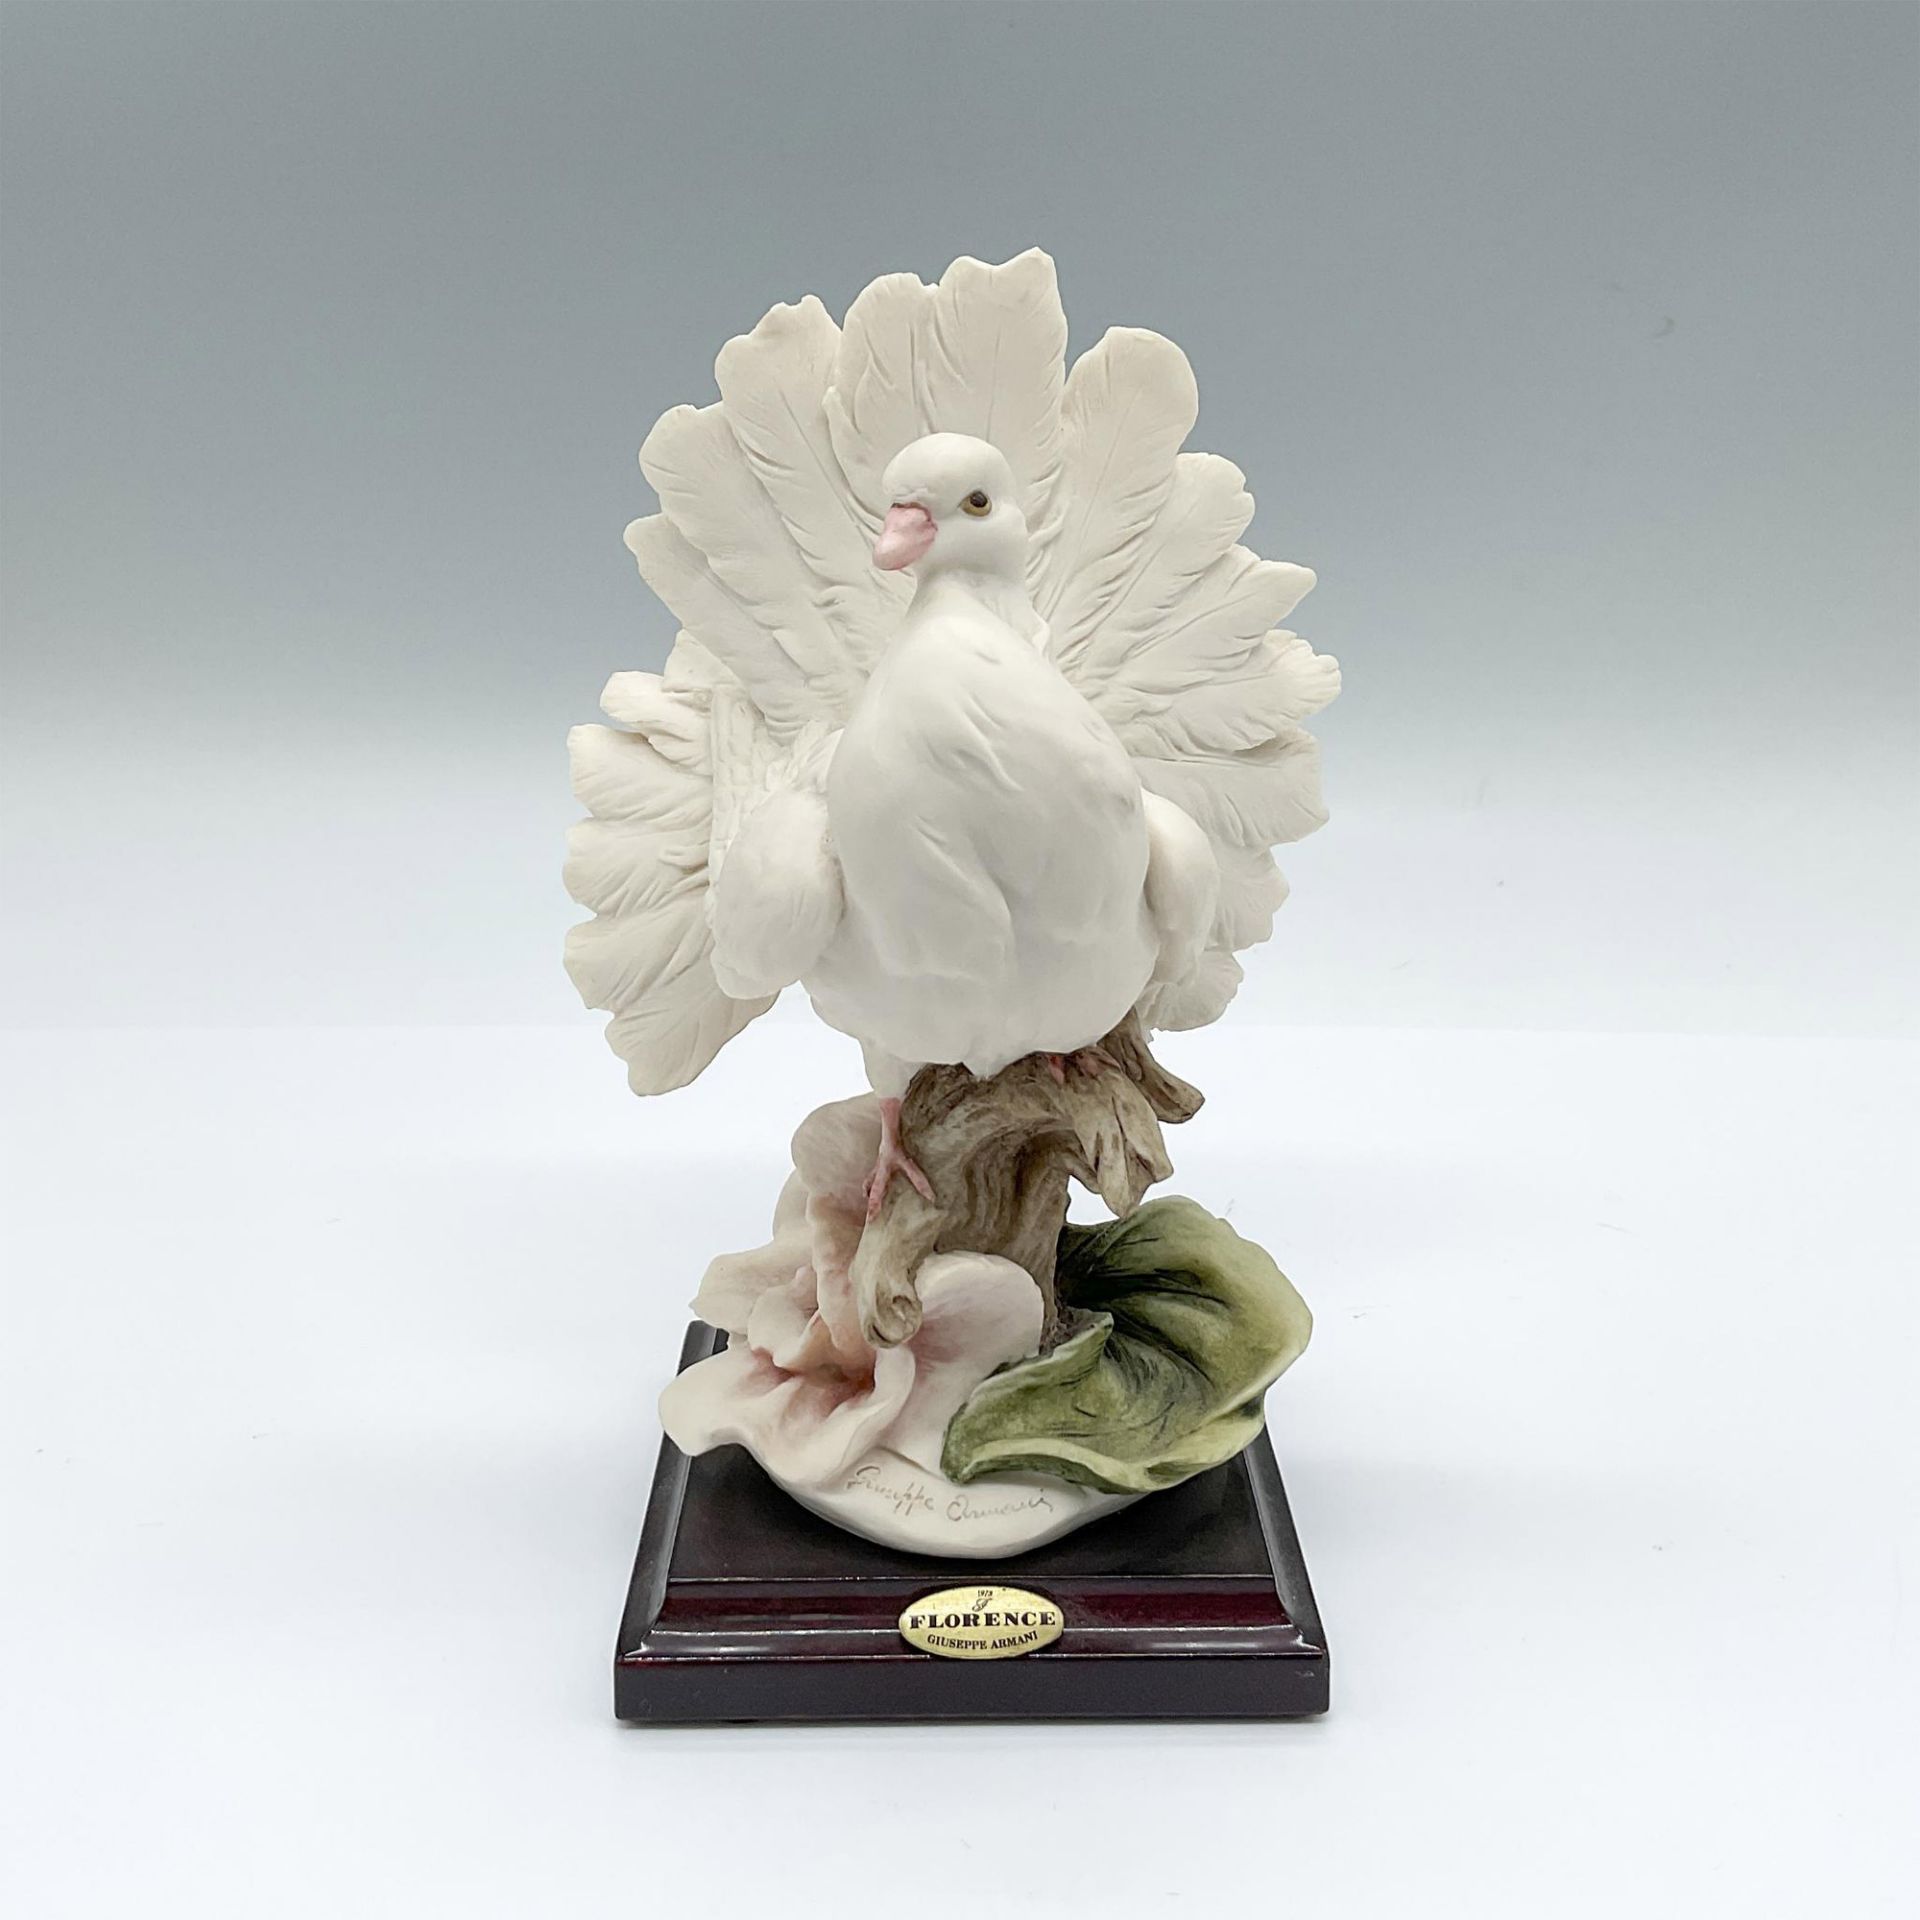 Florence Giuseppe Armani Figurine, Dove on Flower